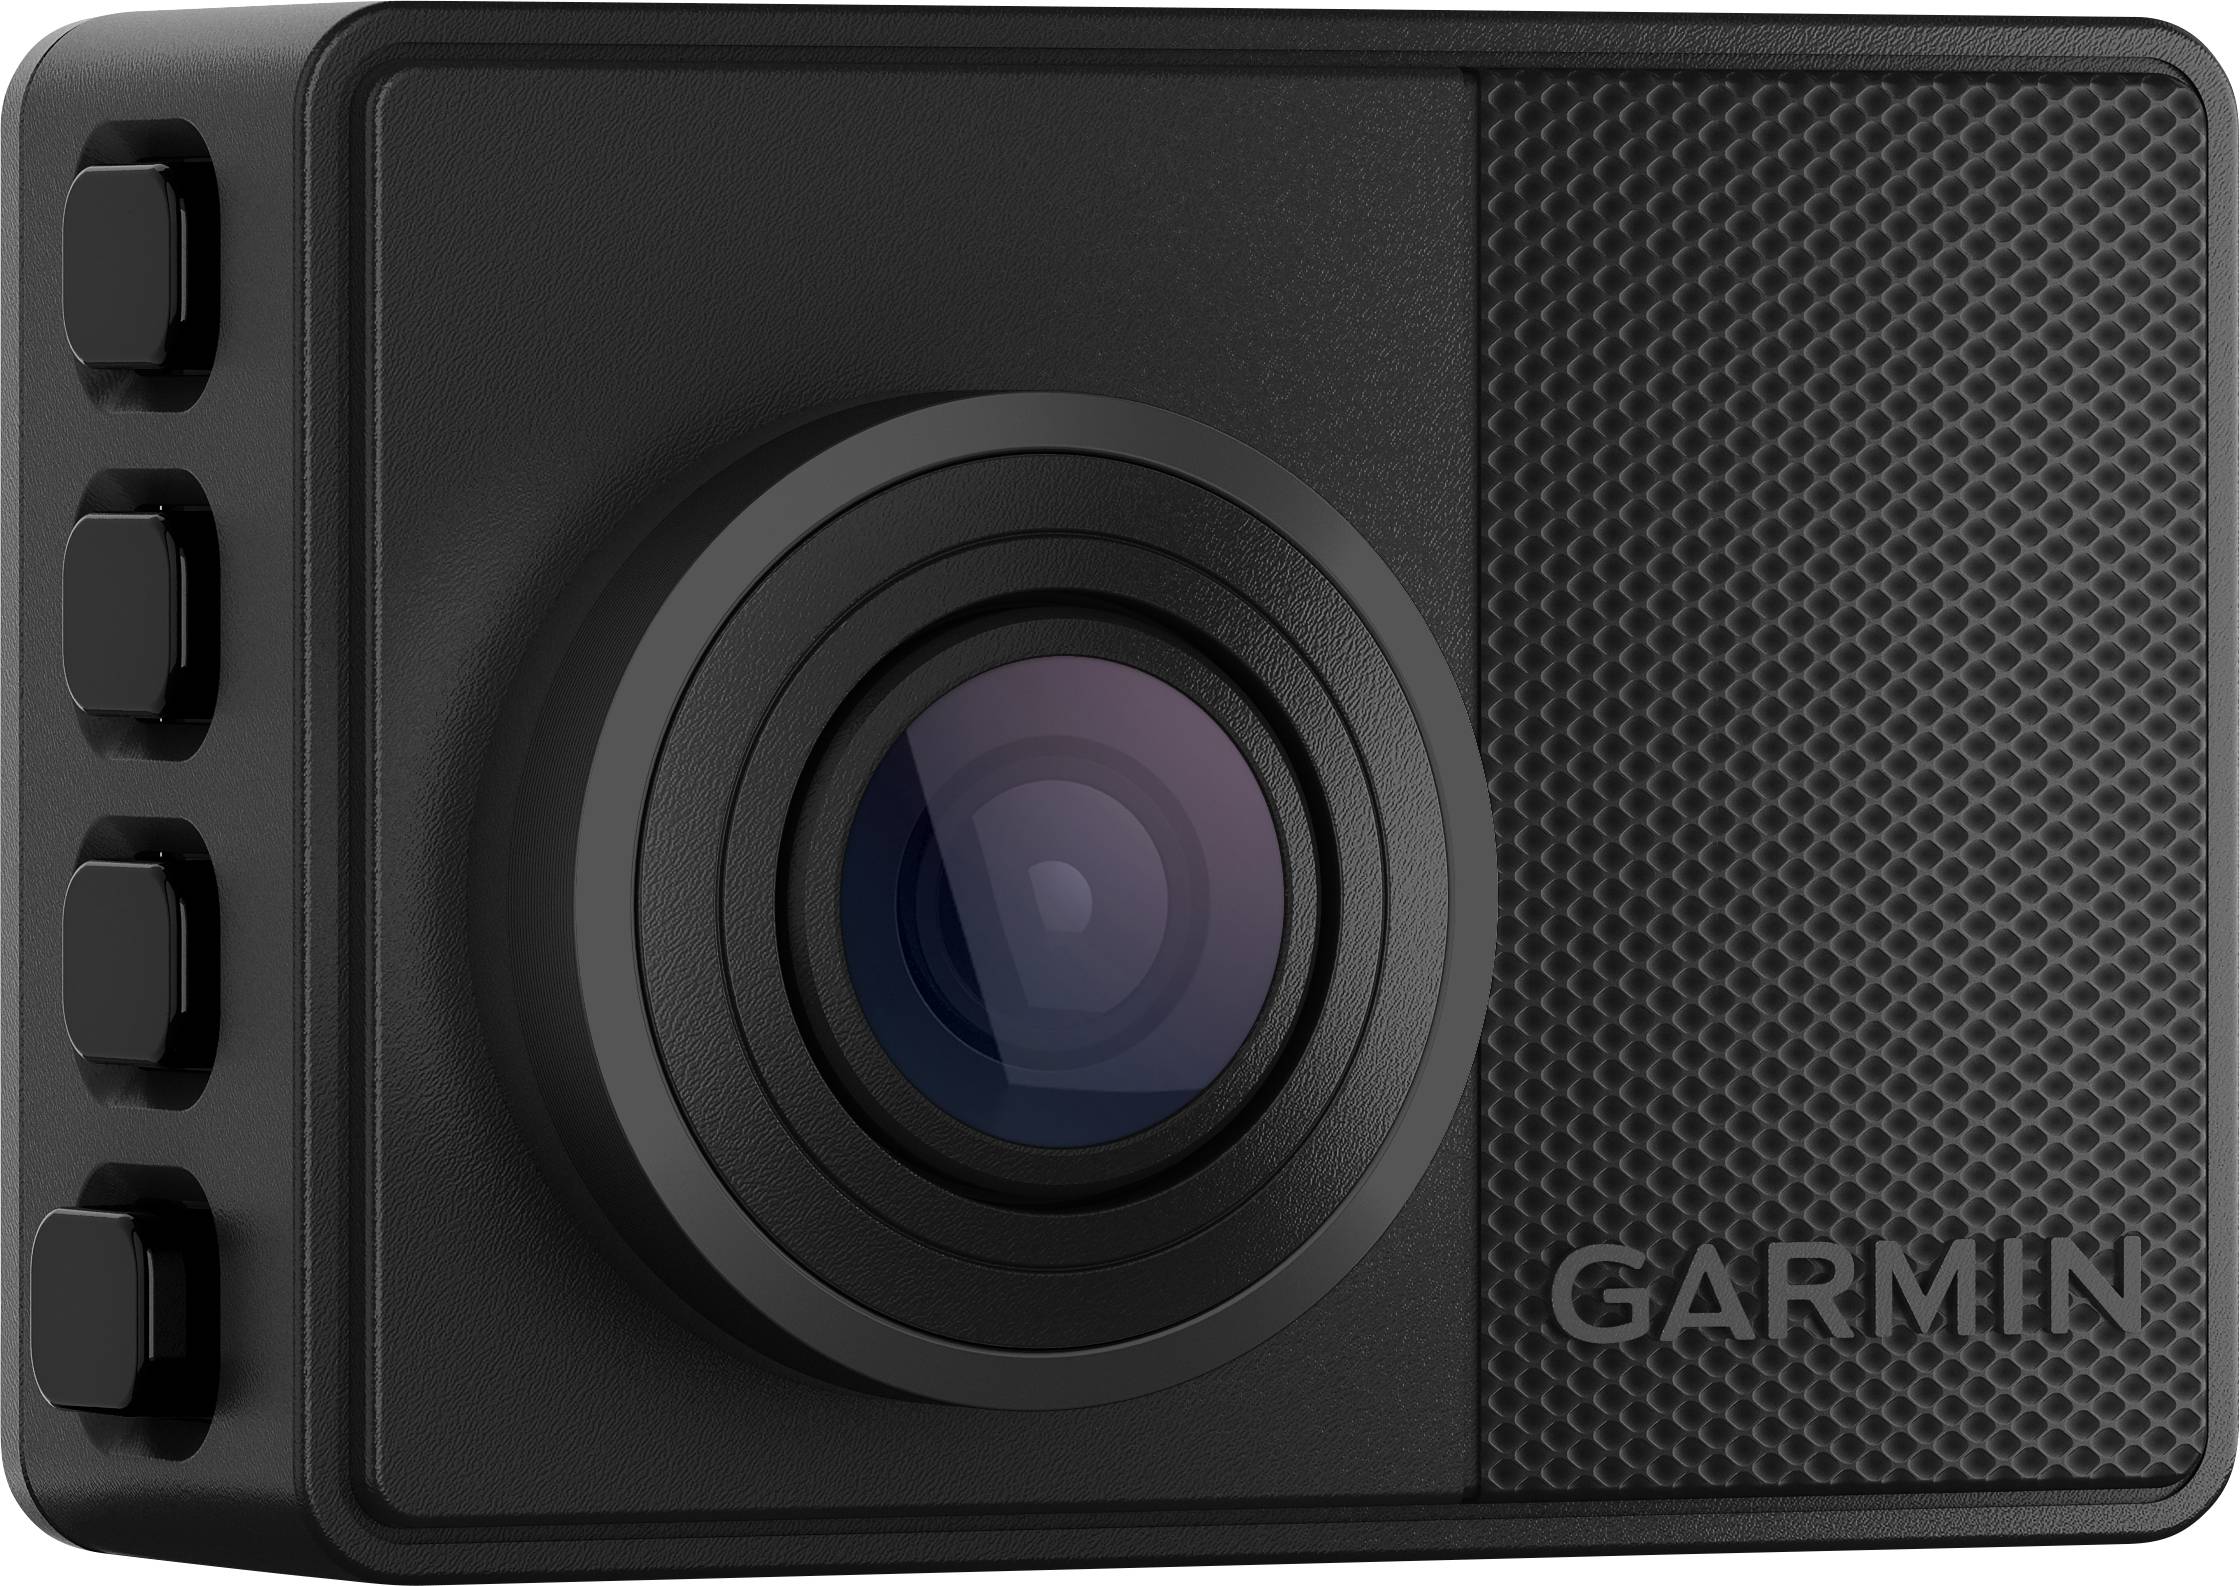 hebzuchtig Huiskamer artillerie Garmin Dash Cam™ 67W Dashcam Horizontal viewing angle (max.)=180 °  Proximity alert, Automatic start, Display, Accelero | Conrad.com